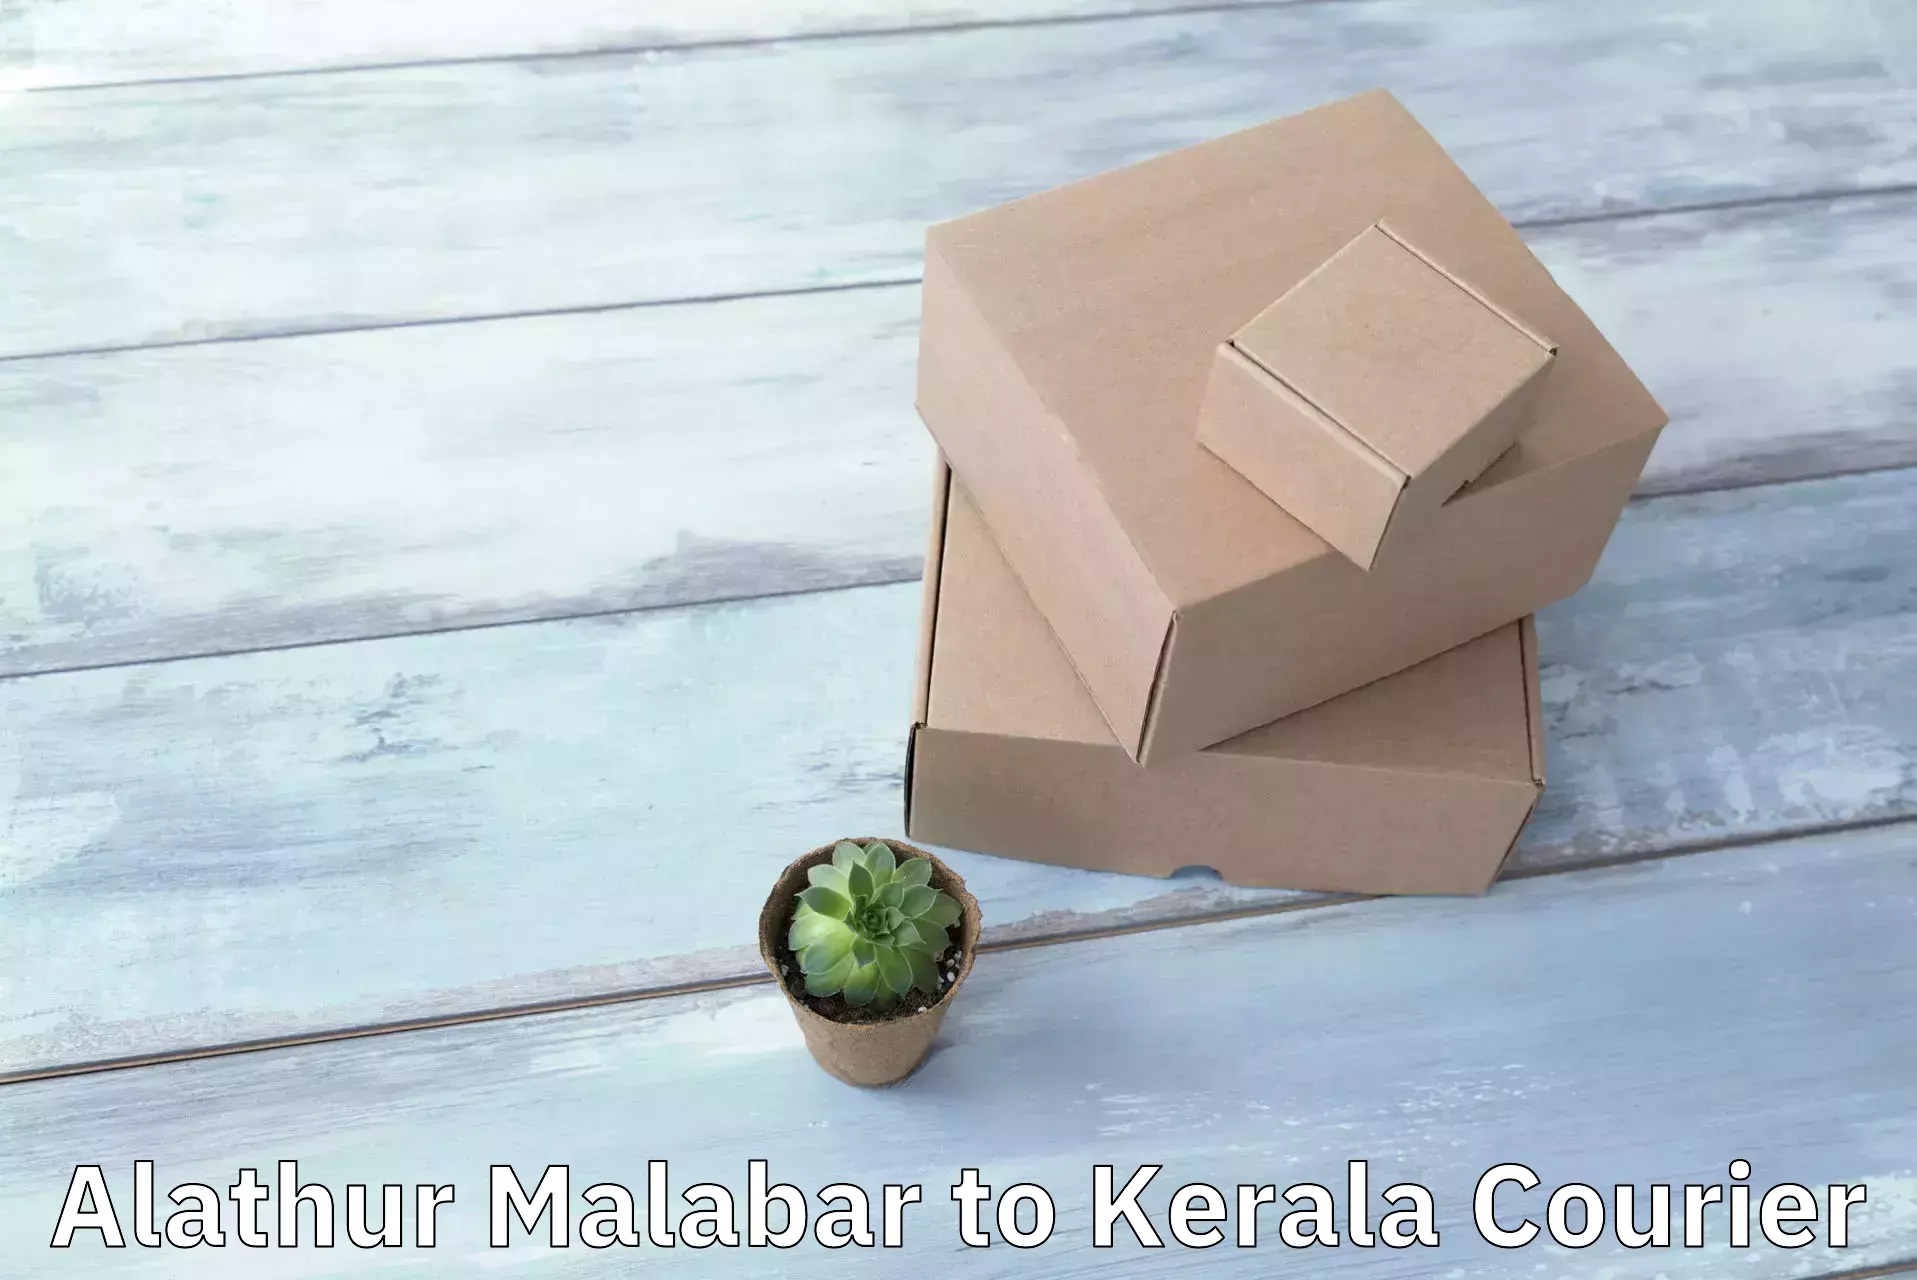 Supply chain delivery Alathur Malabar to Cochin Port Kochi